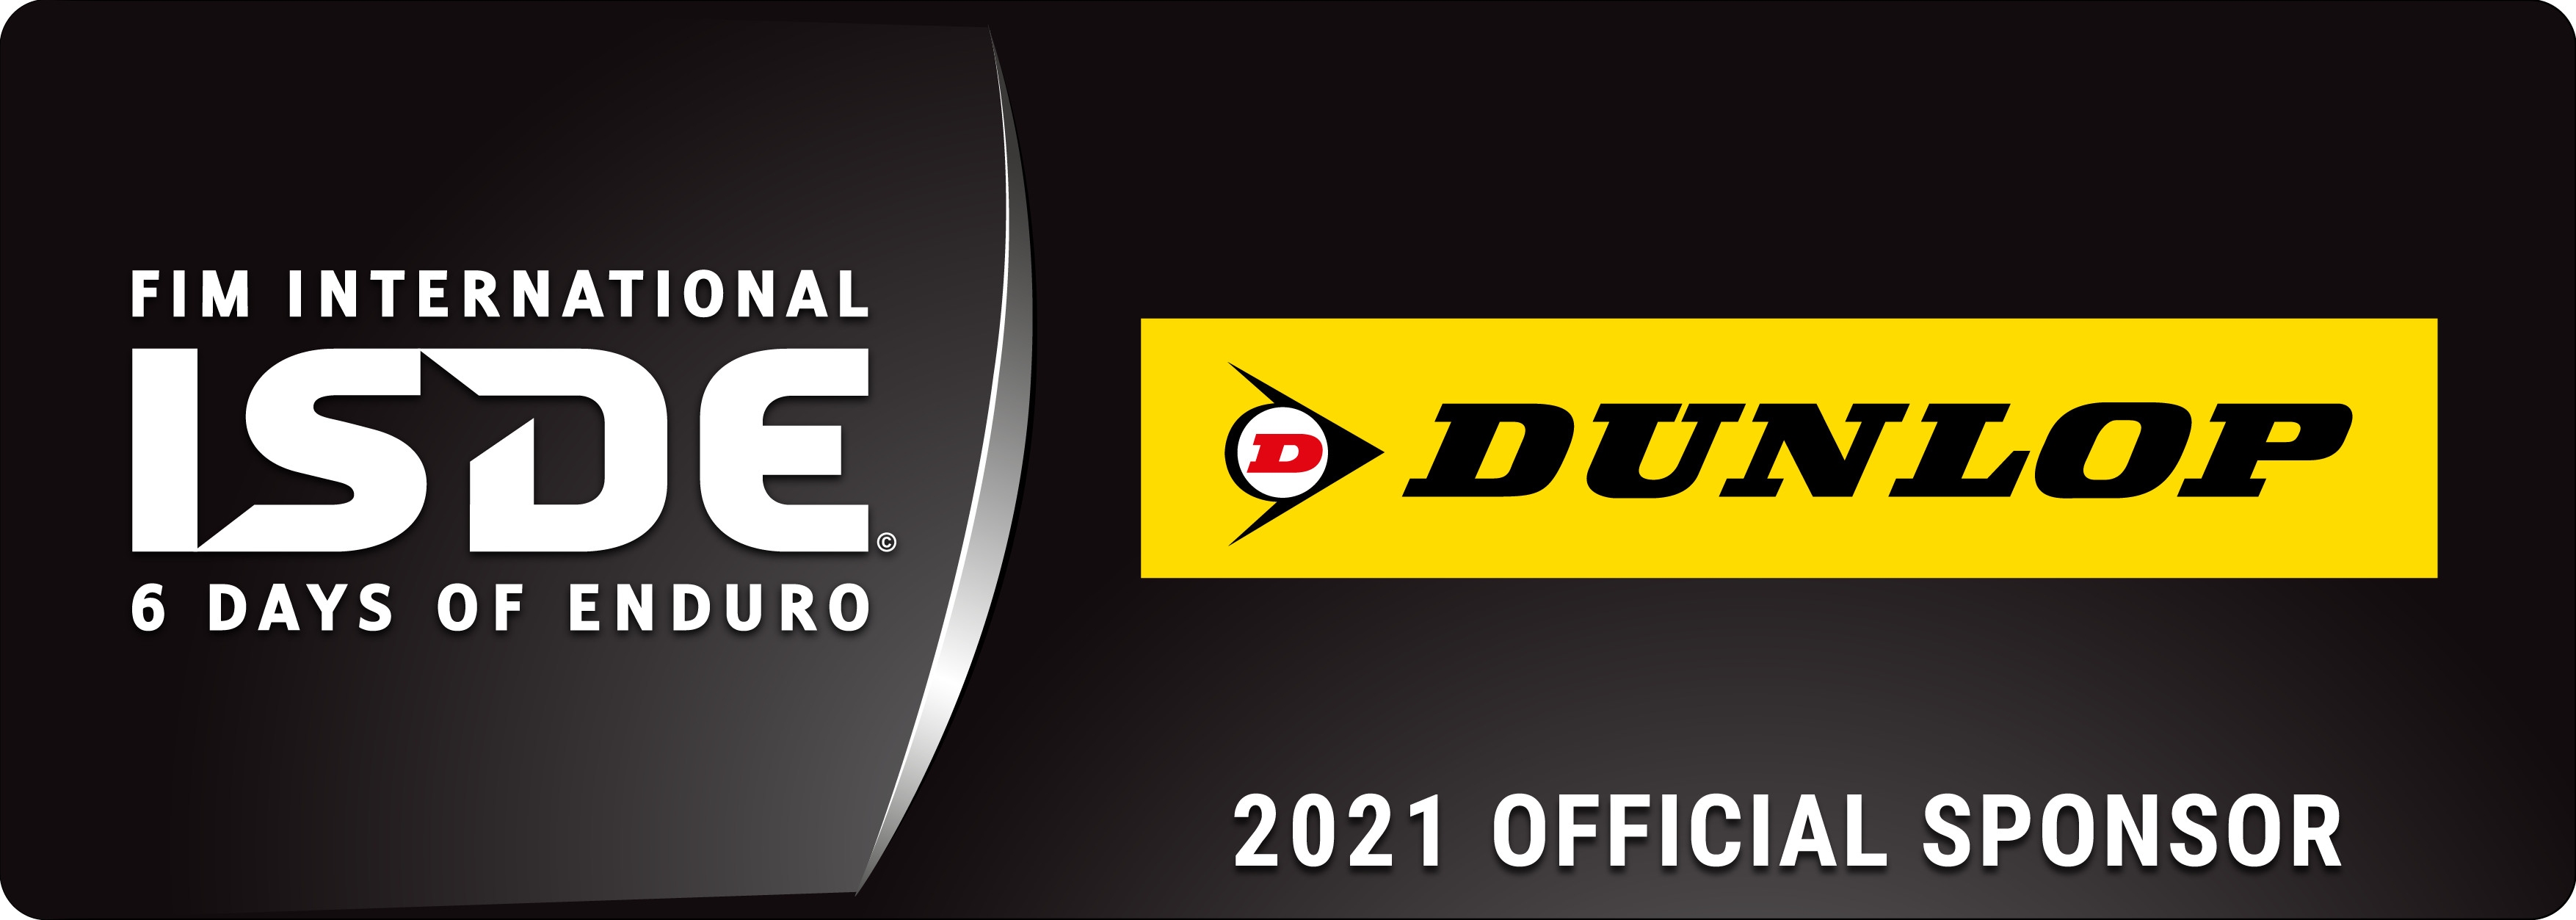 Dunlop announced as an official sponsor to FIM ISDE 2021 - FIM ISDE 2022